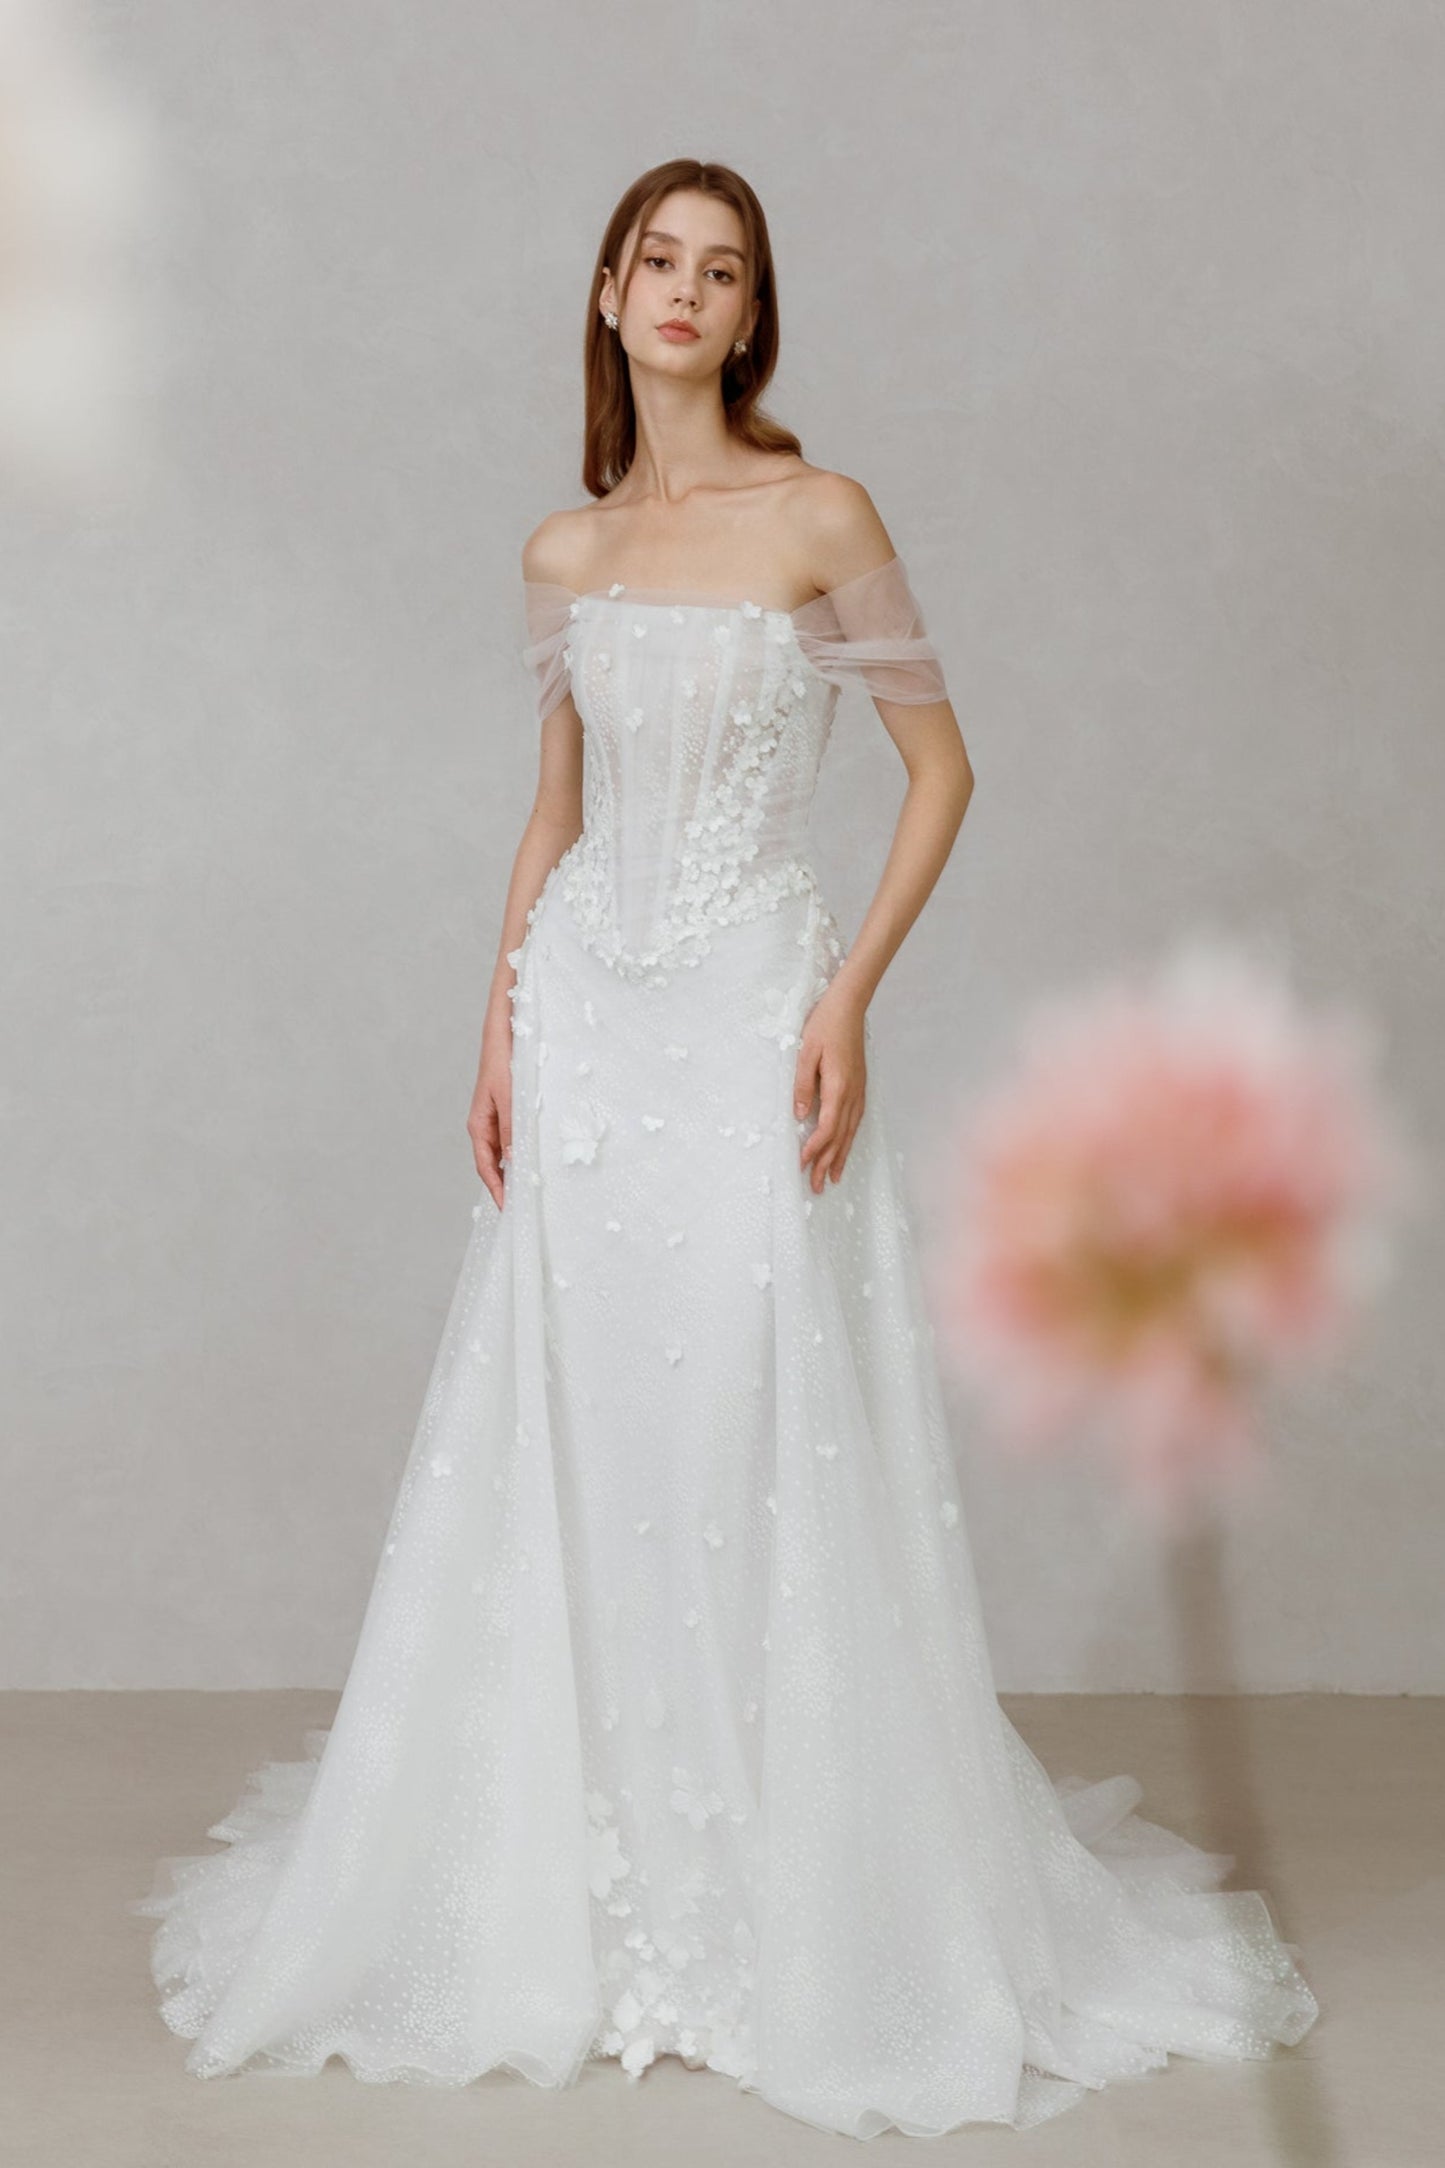 Korsett-Tull-Brautkleid mit Meerjungfrauen-Rock Corset tull wedding dress with mermaid skirt